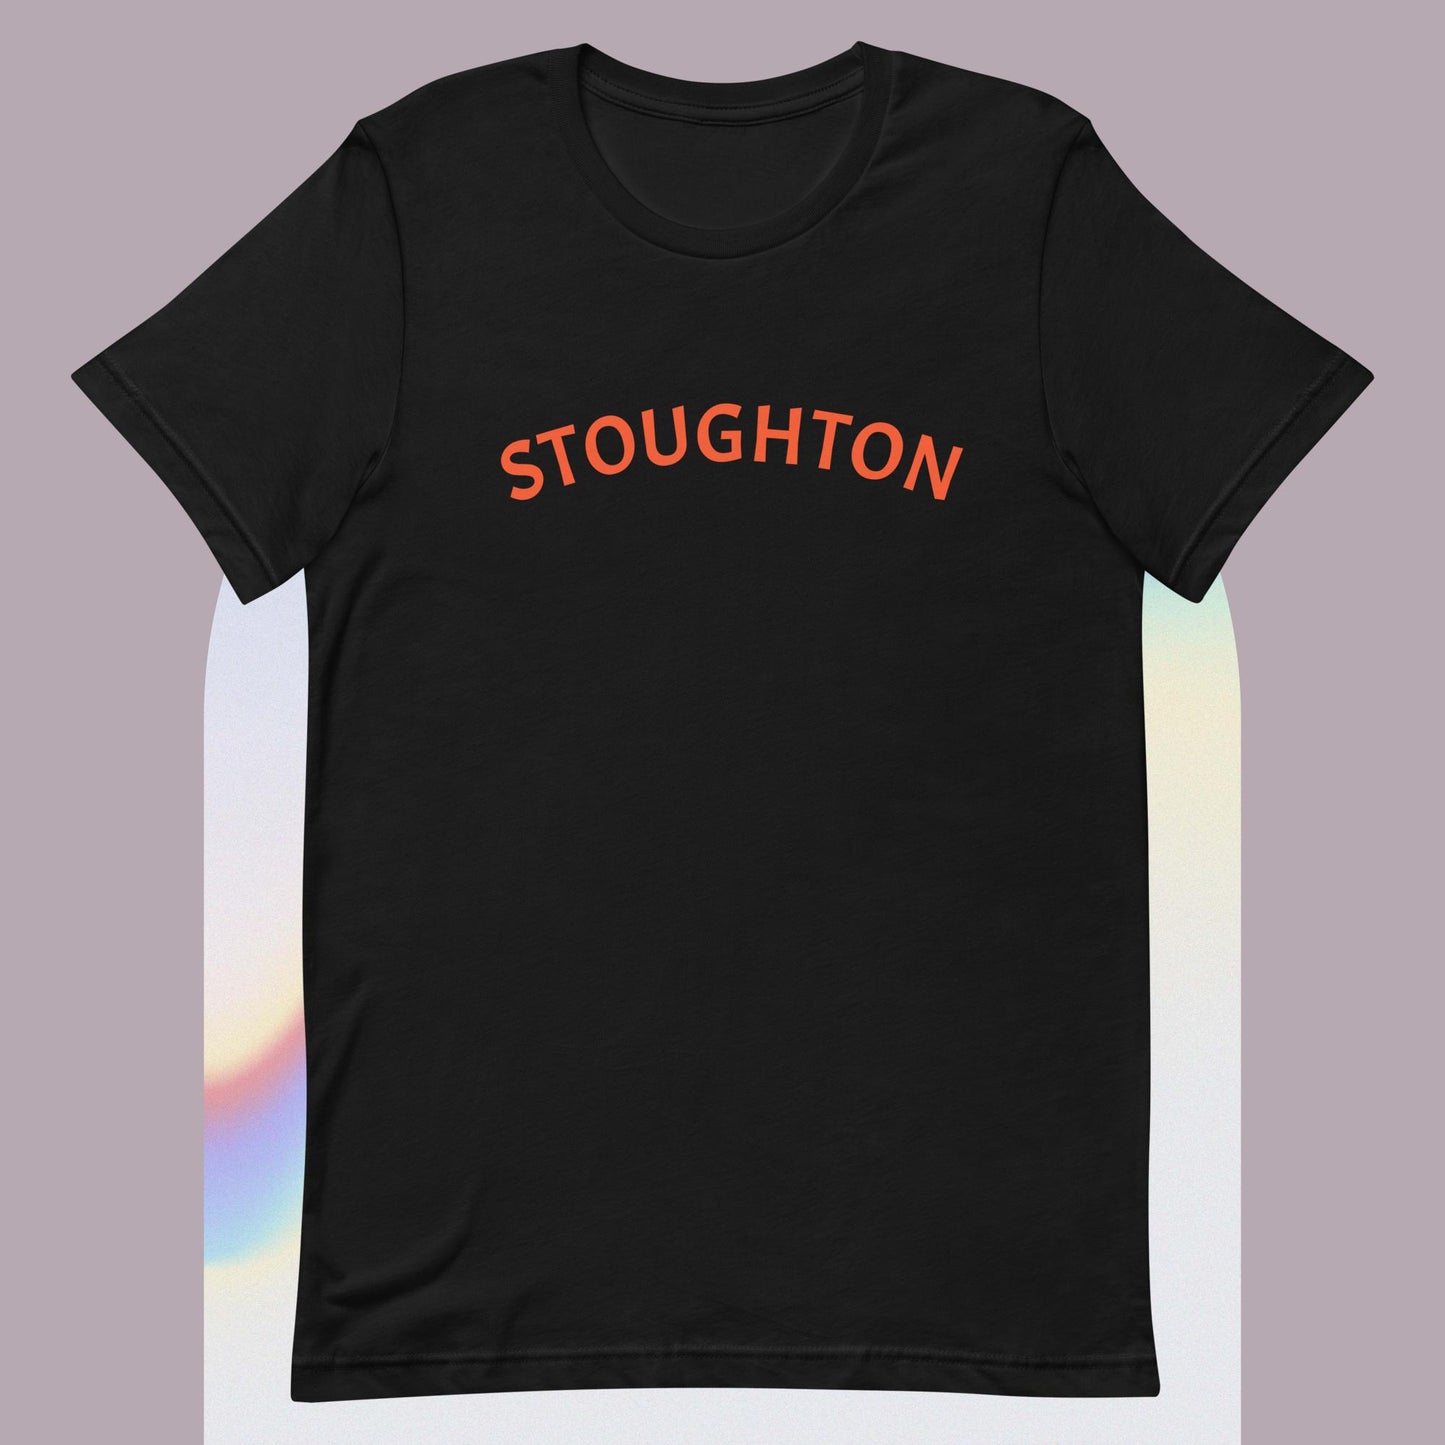 Stoughton unisex t-shirt